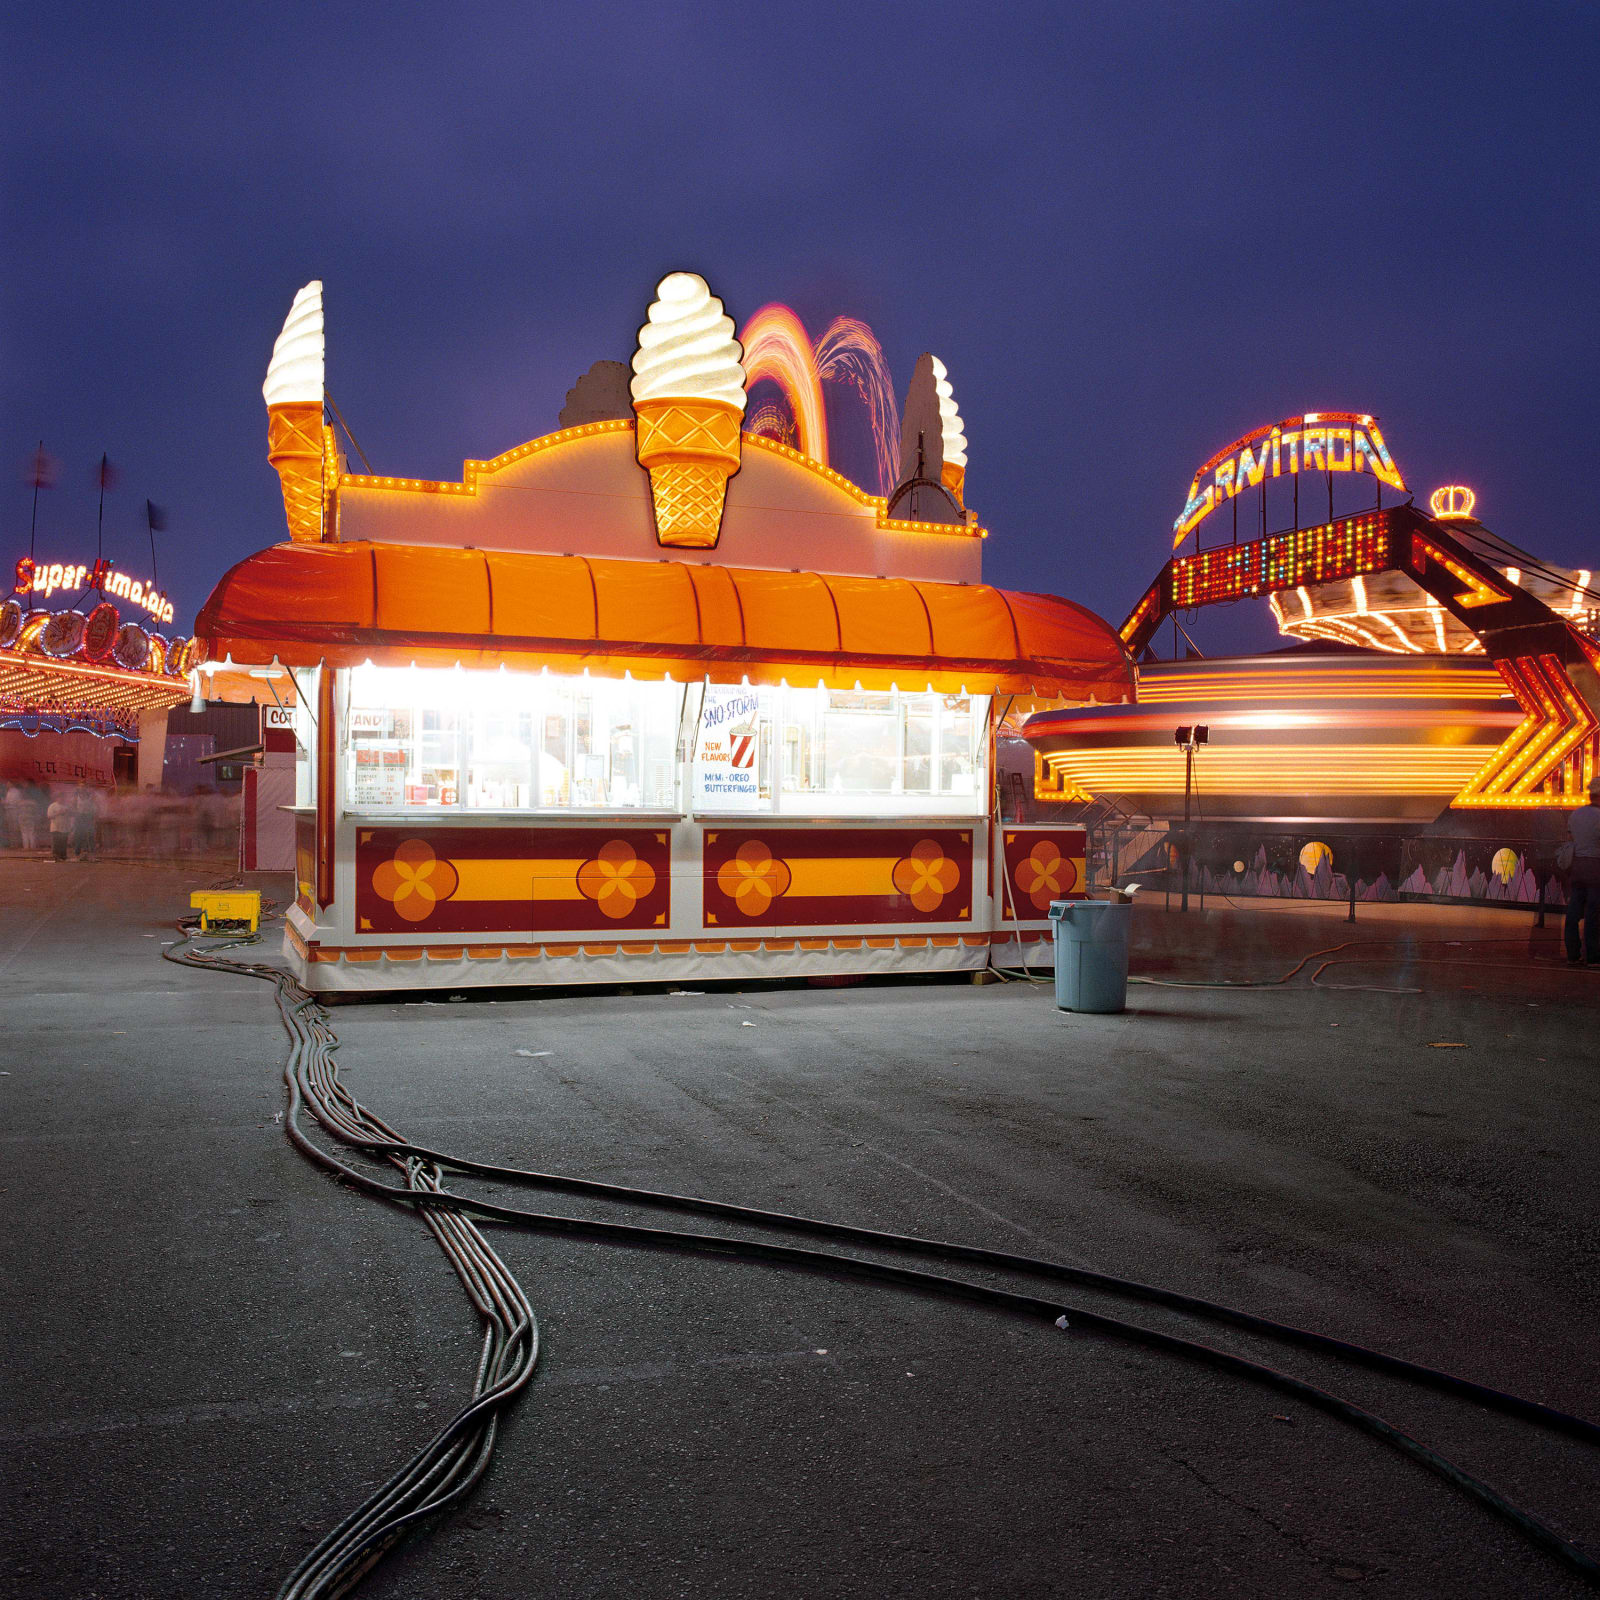 Jeff Brouws, Ice Cream Booth at Night, Ventura, California, 1989